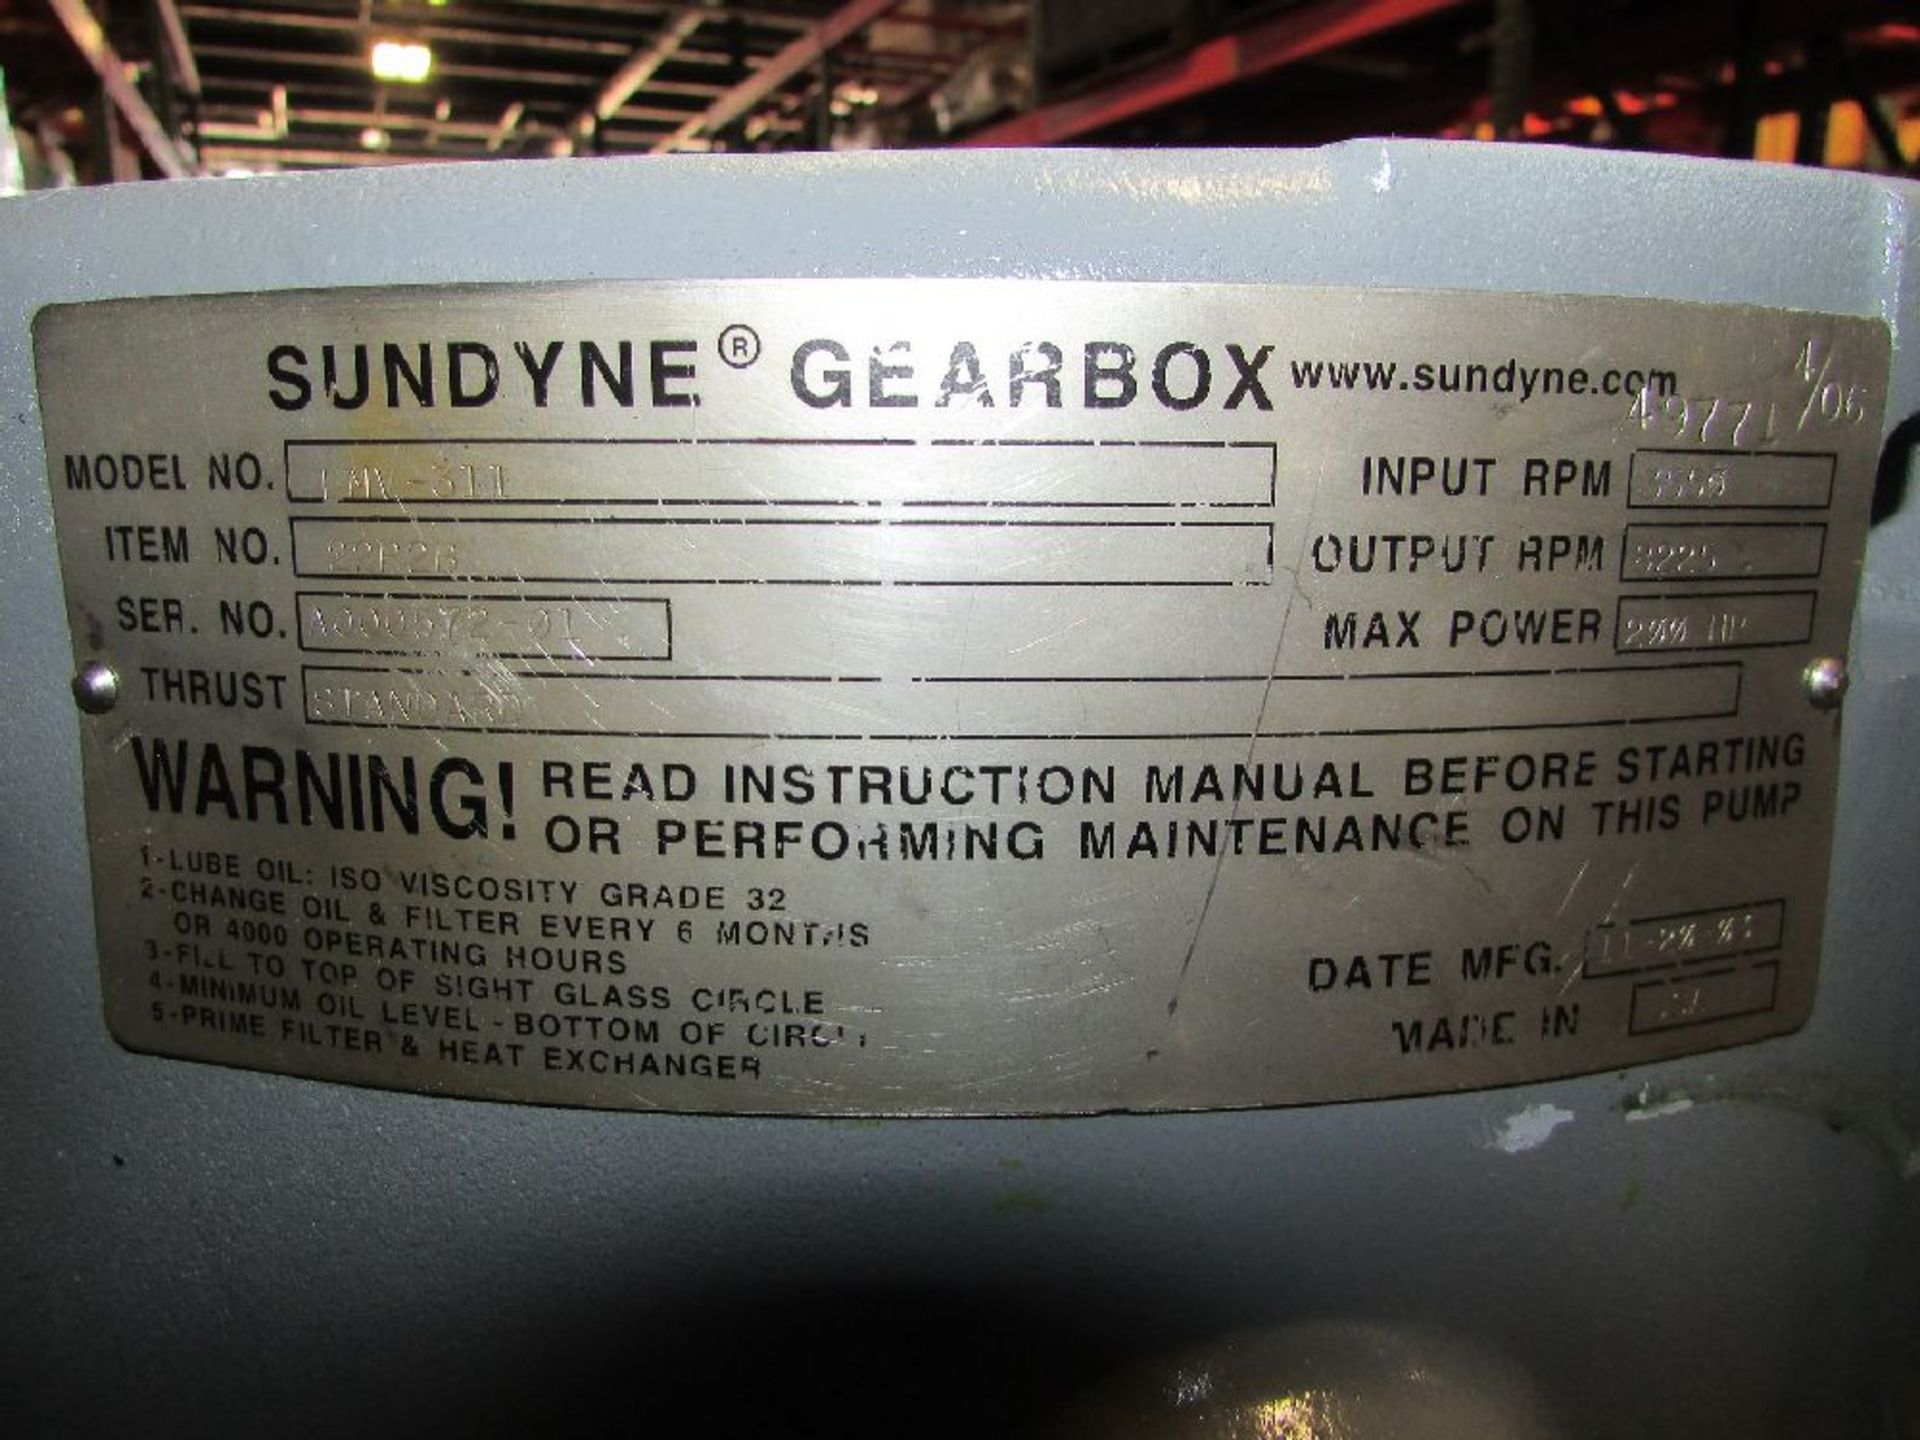 Sundyne Model LMV311 200 HP Gear Box - Image 5 of 5